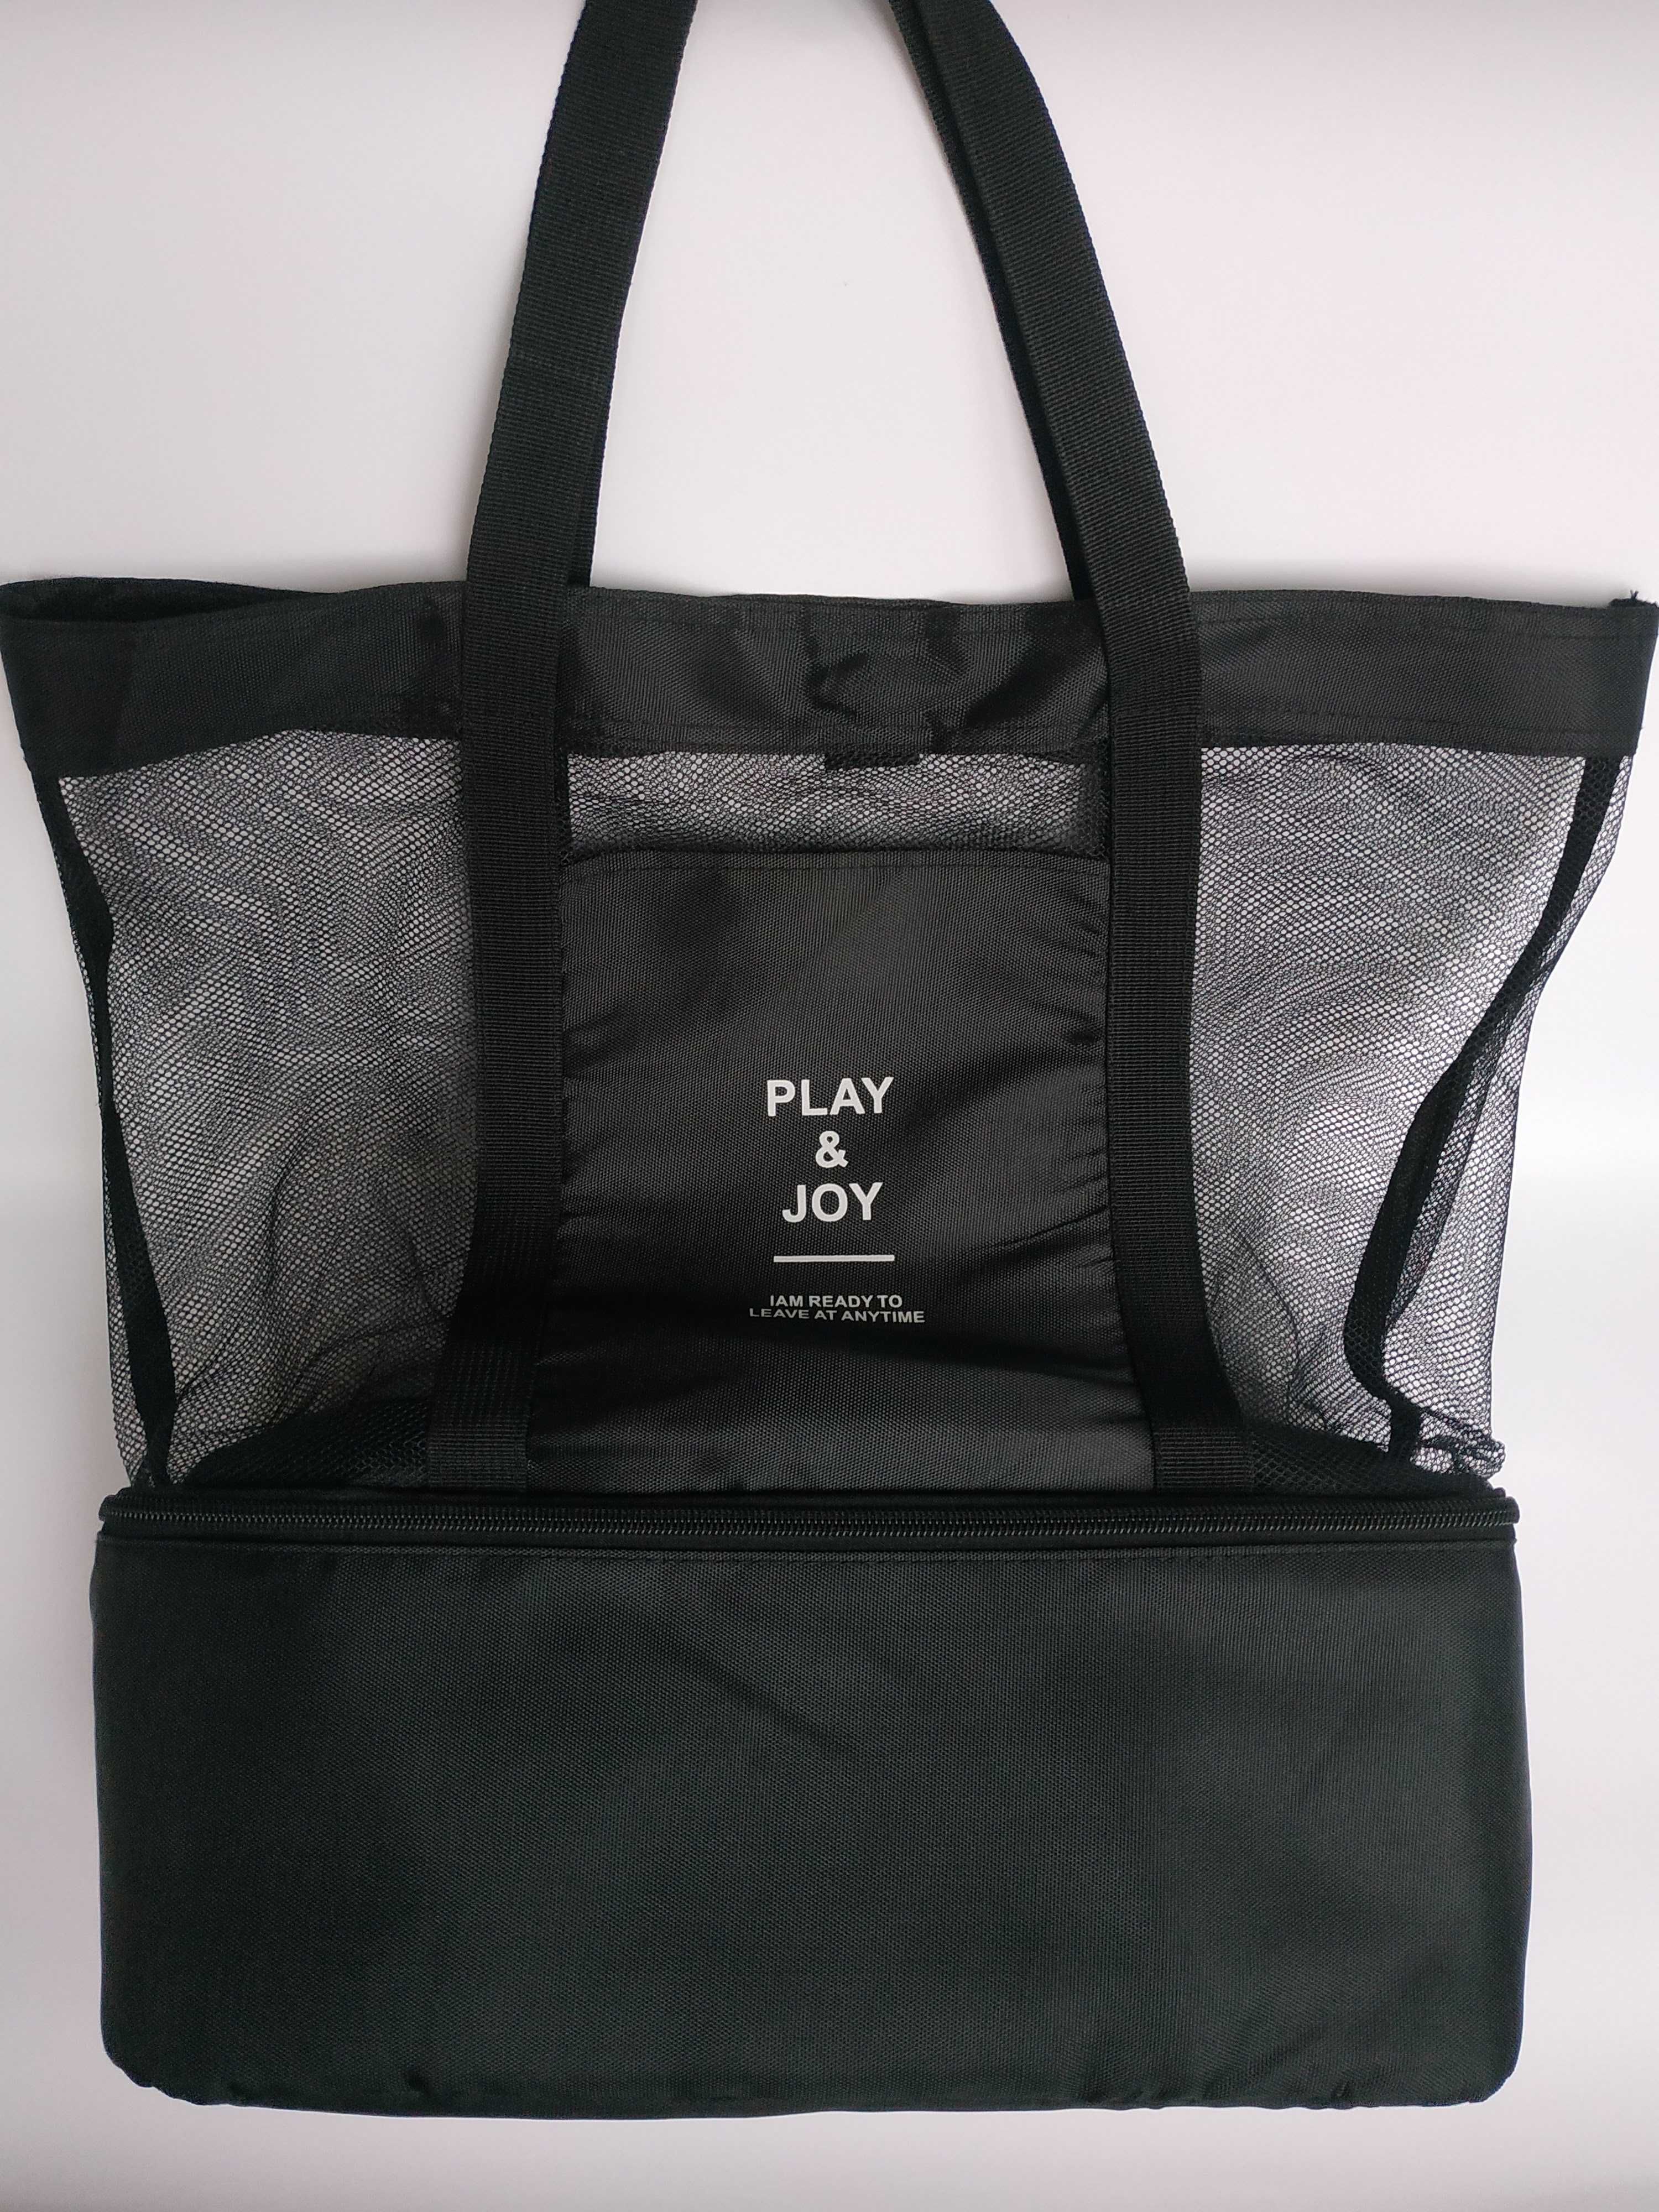 Play&Joy 2in1 Limited Edition - Оригинальная пляжная сумка